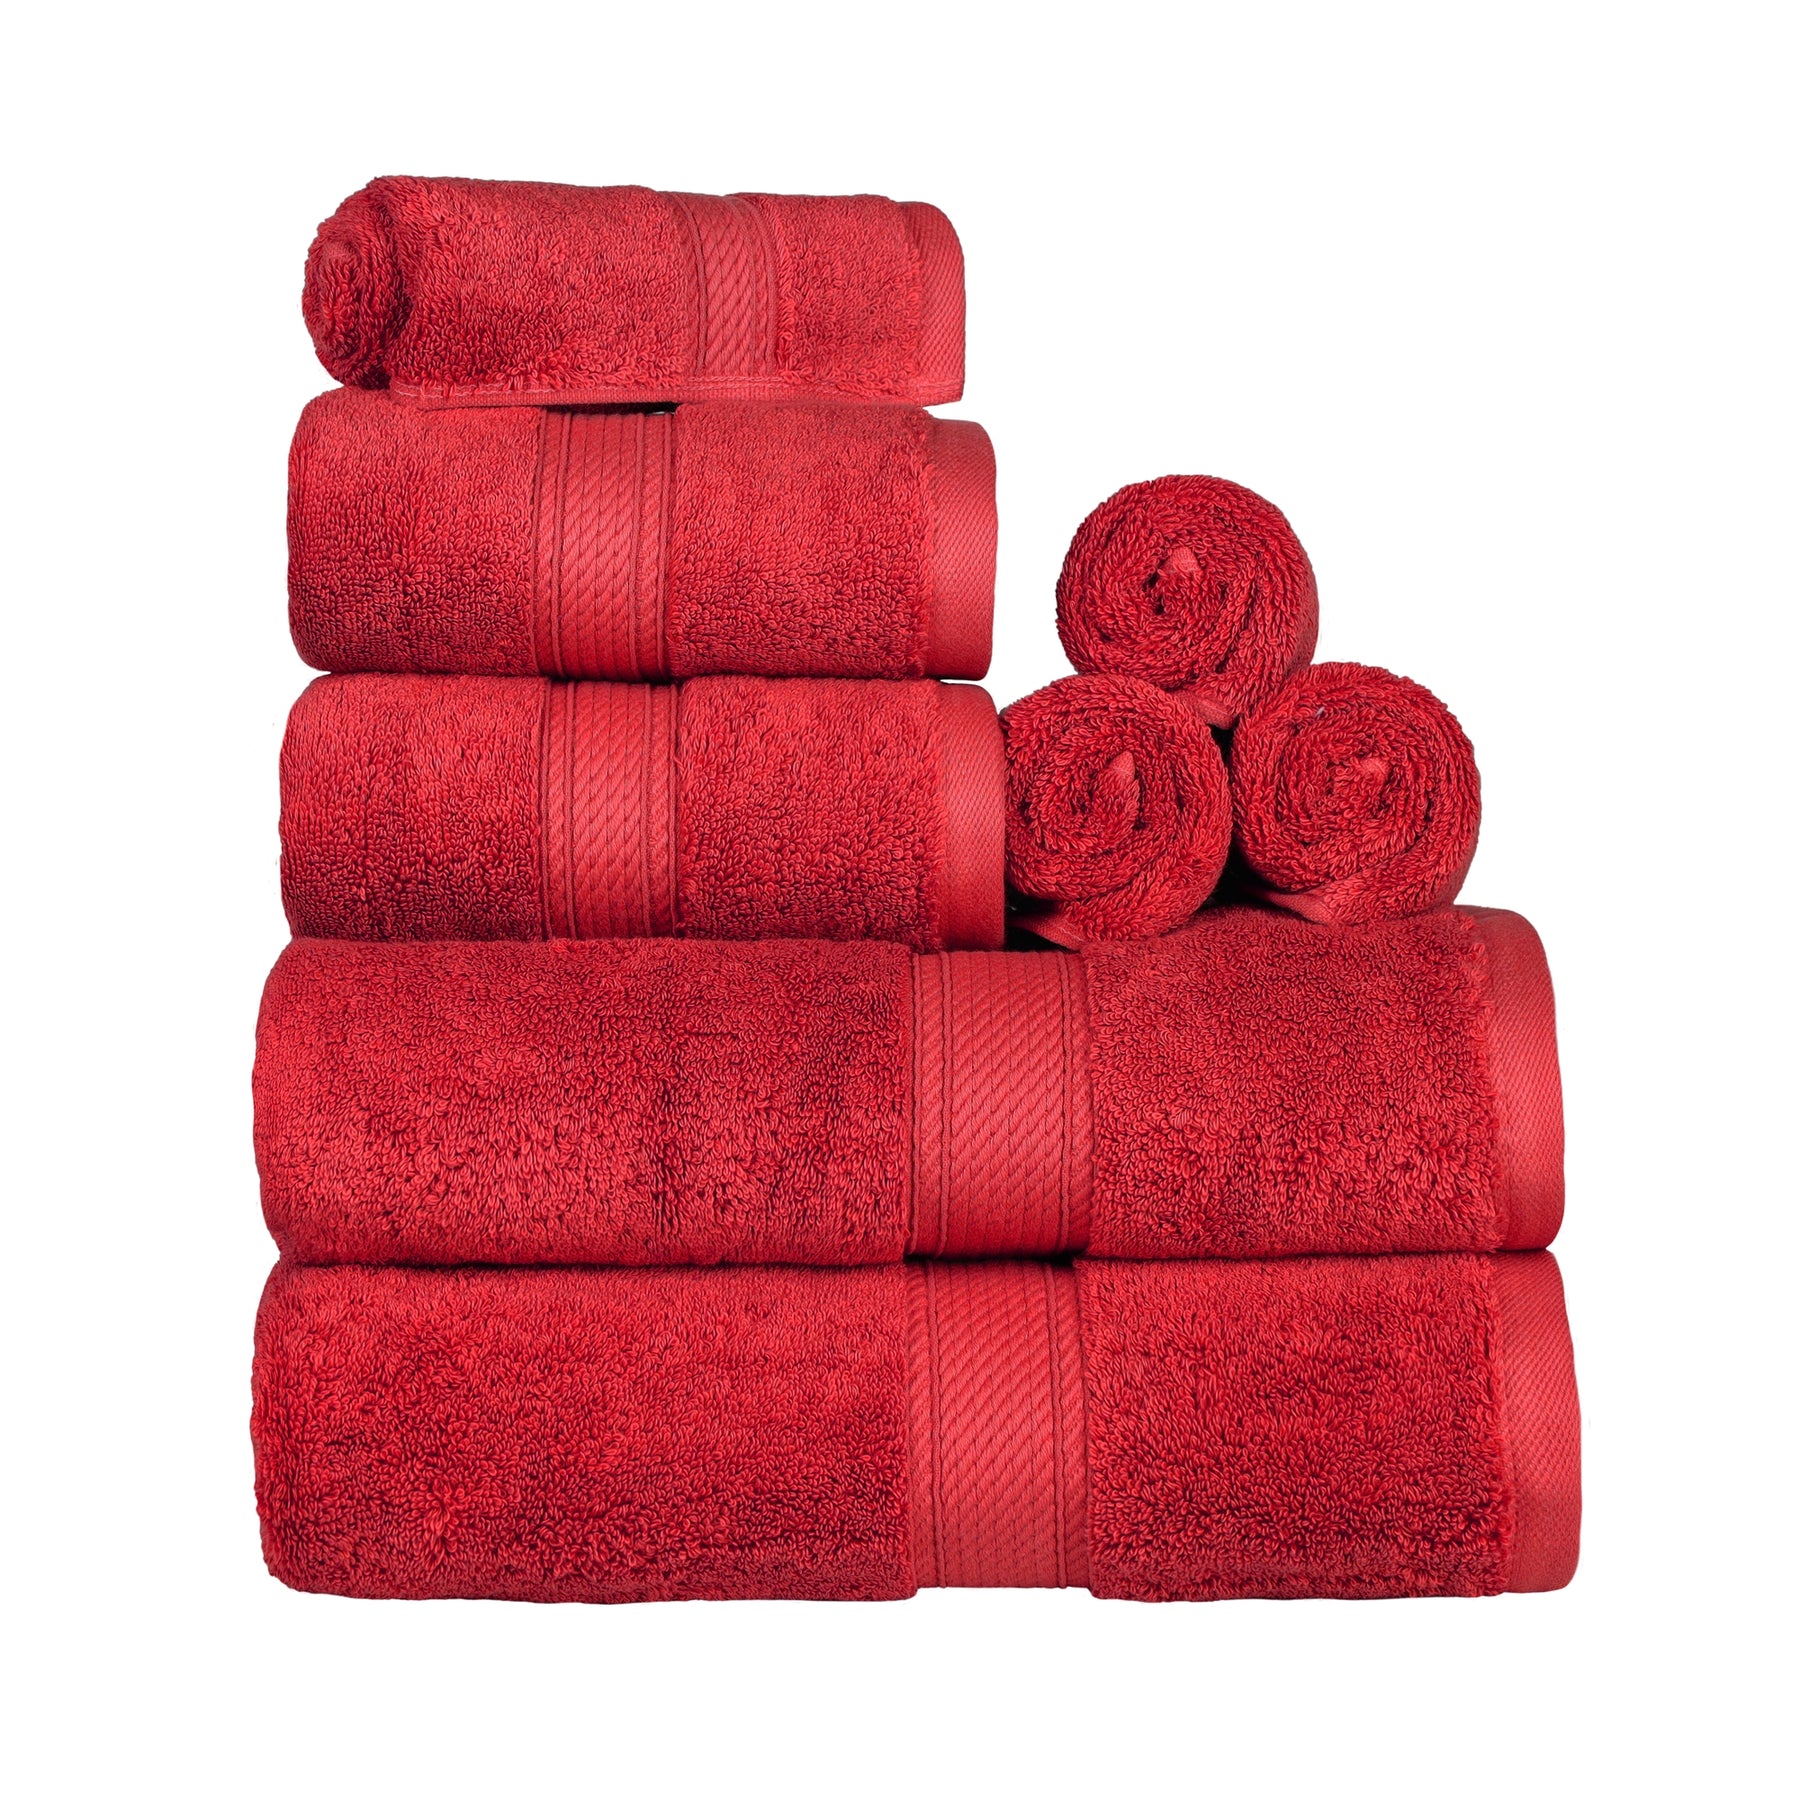 Egyptian Cotton Heavyweight 8 Piece Towel Set - Red